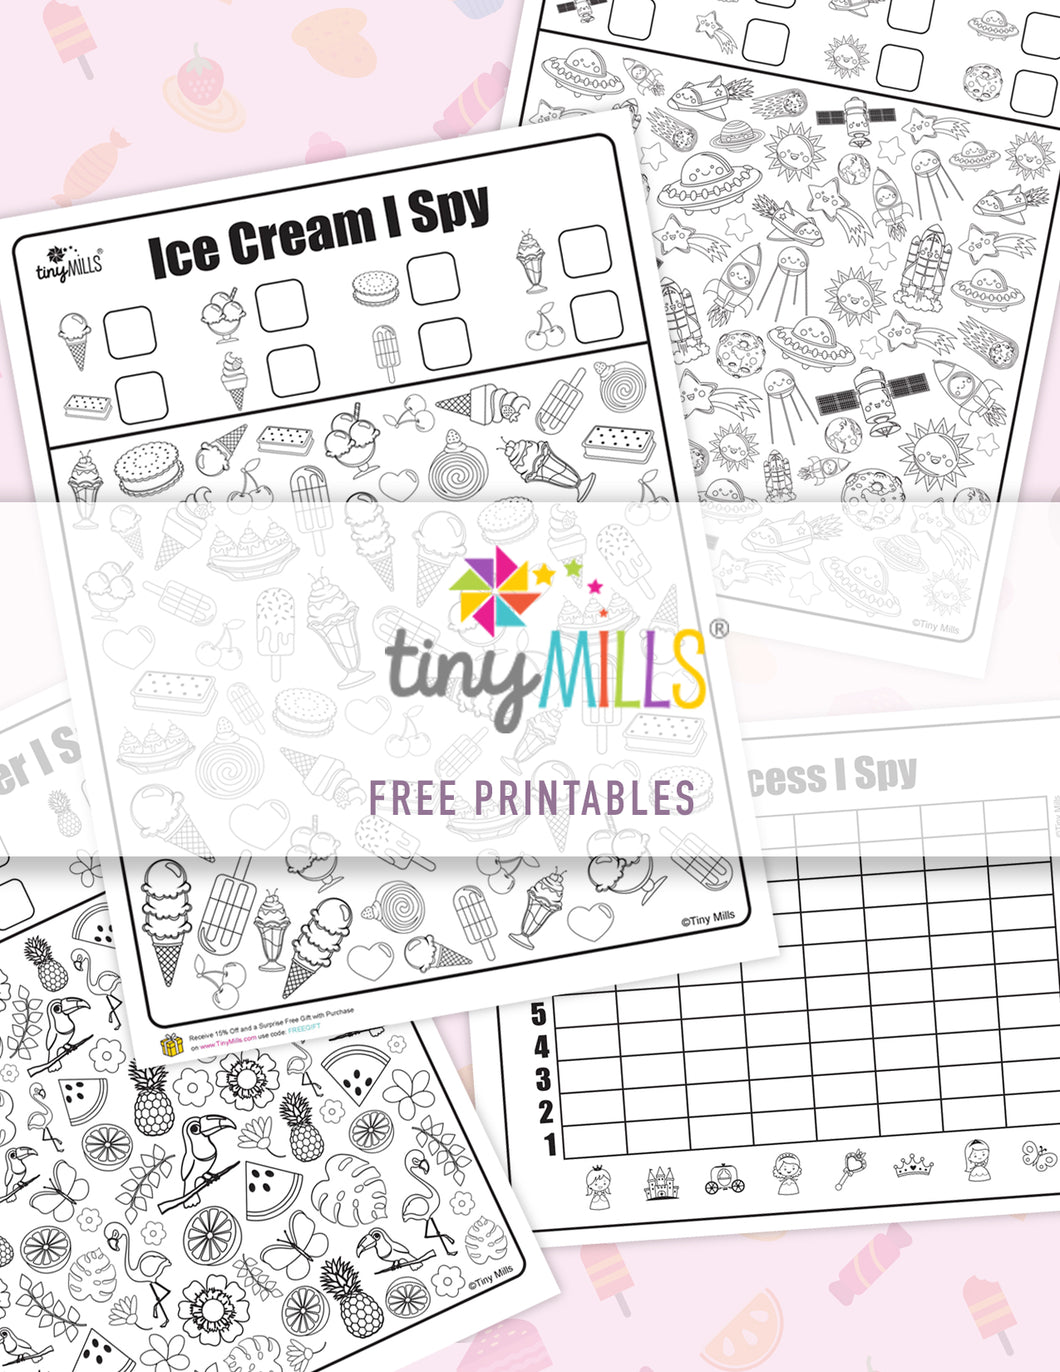 Free printable Ice Cream I Spy Game Worksheets - 6 Designs